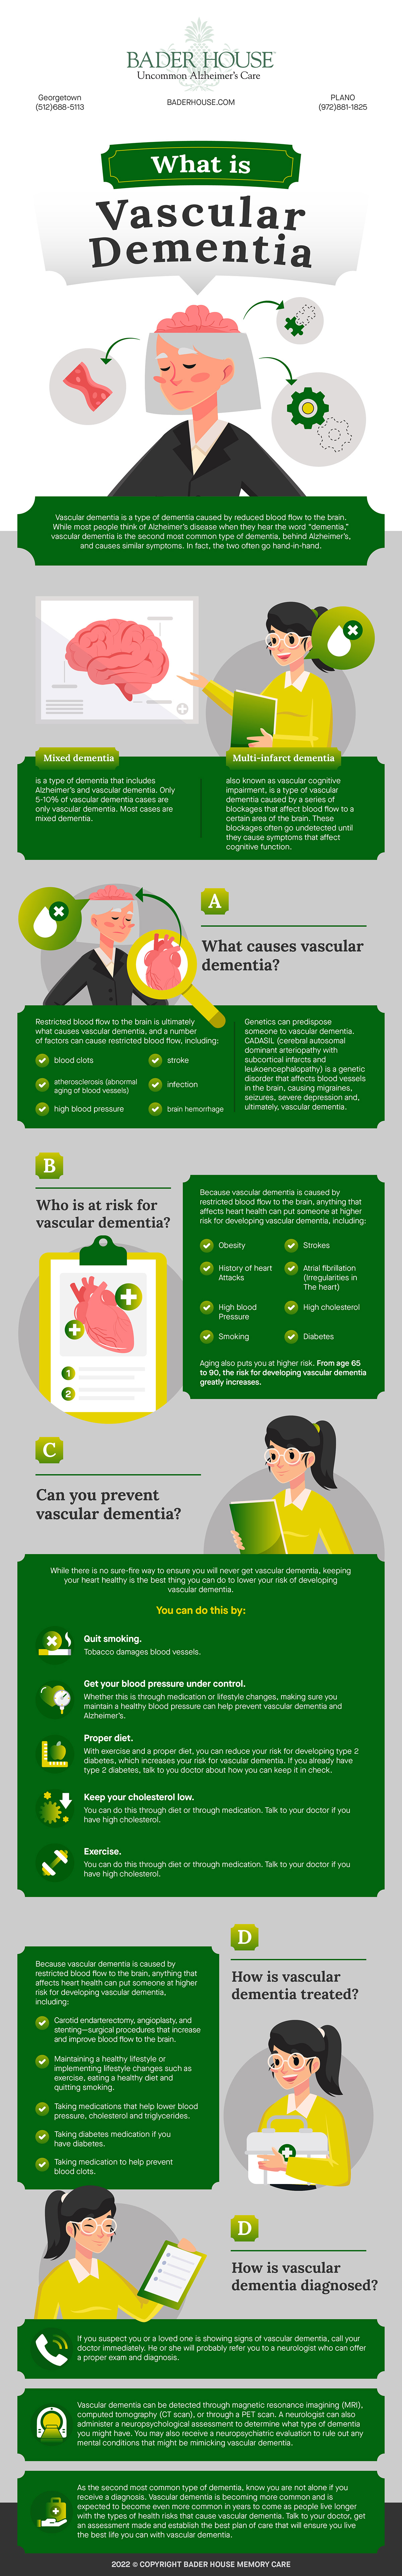 Vascular Dementia Infographic